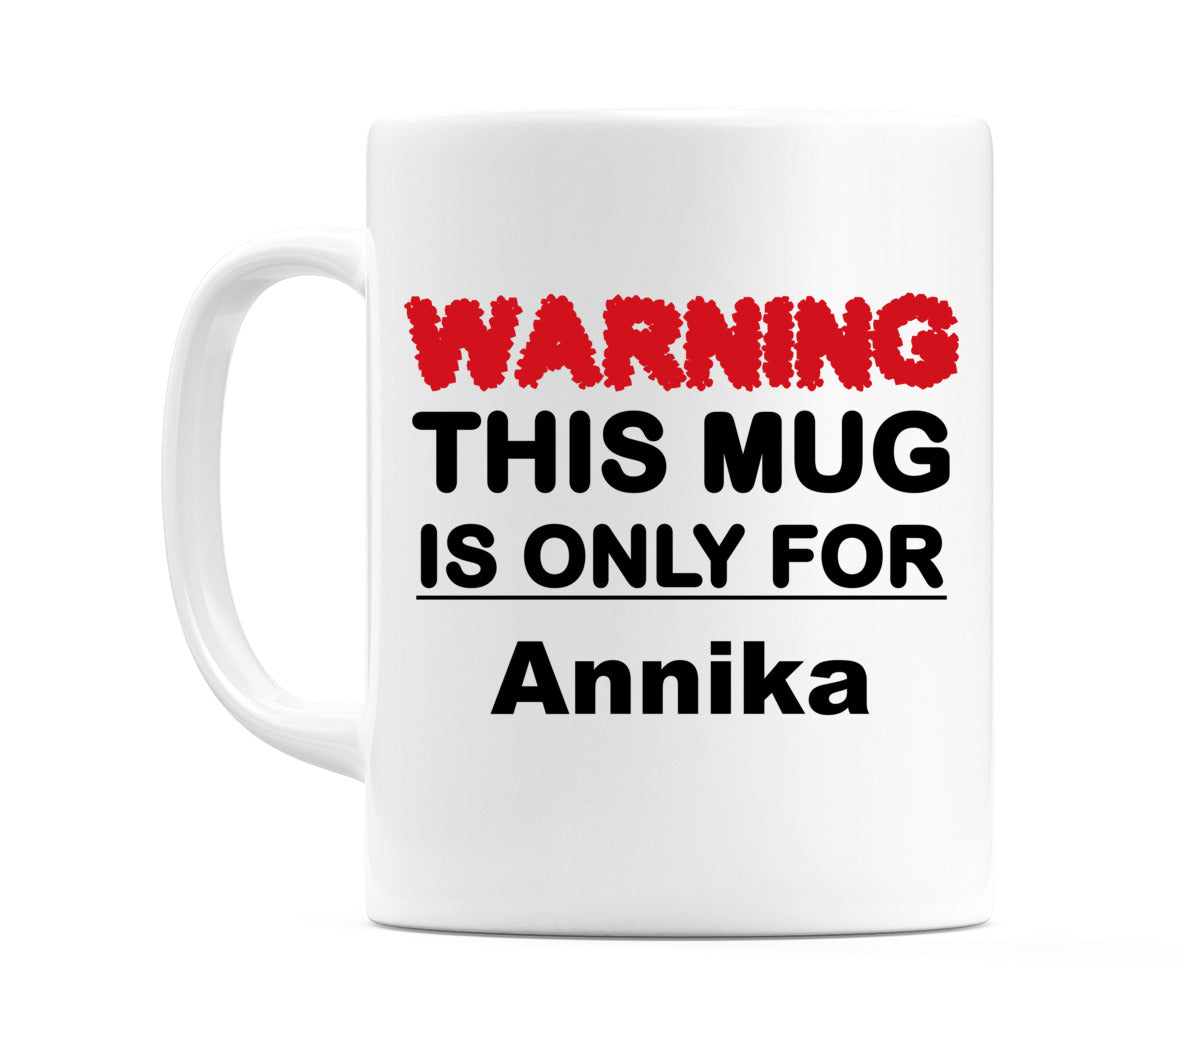 Warning This Mug is ONLY for Annika Mug